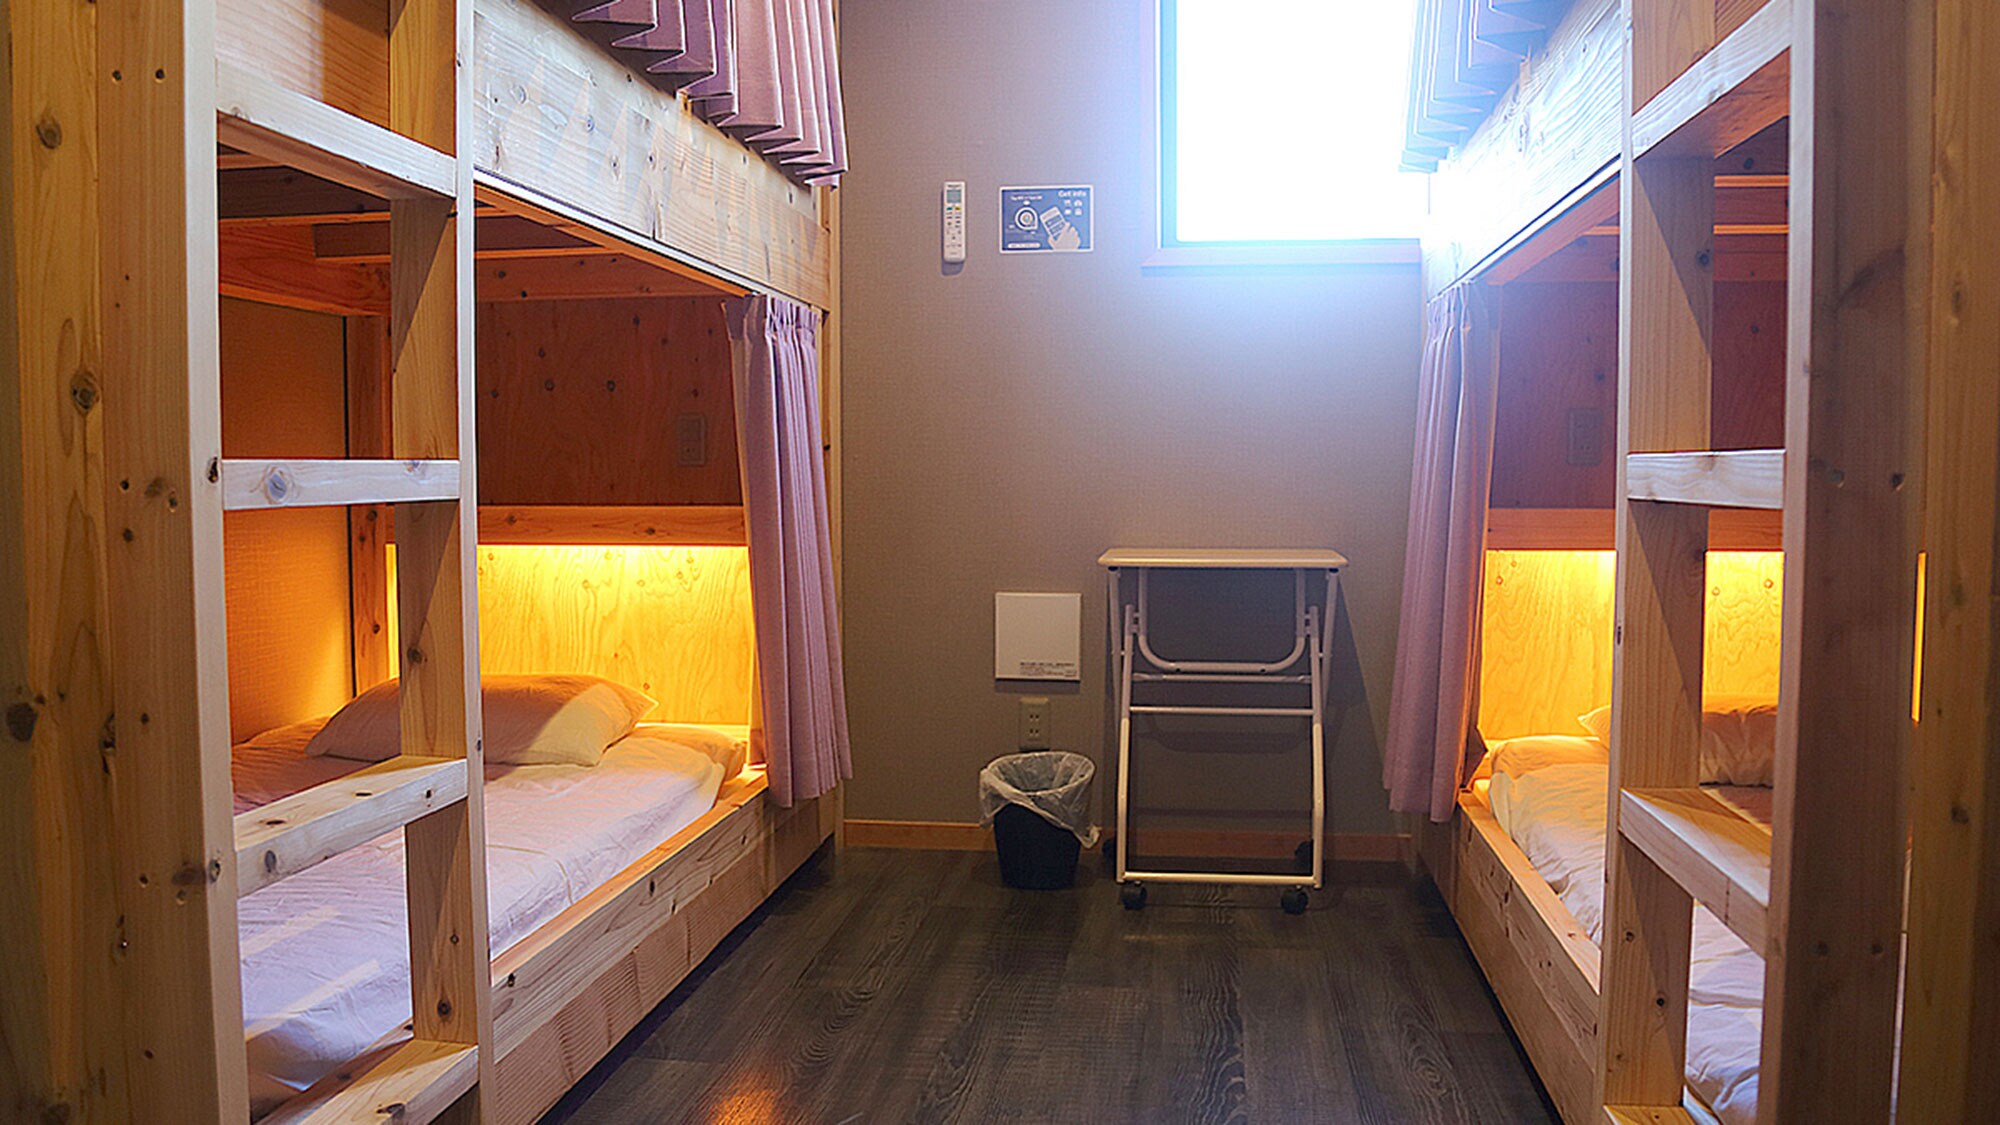 [Asrama] Dua tempat tidur susun dipasang di satu kamar